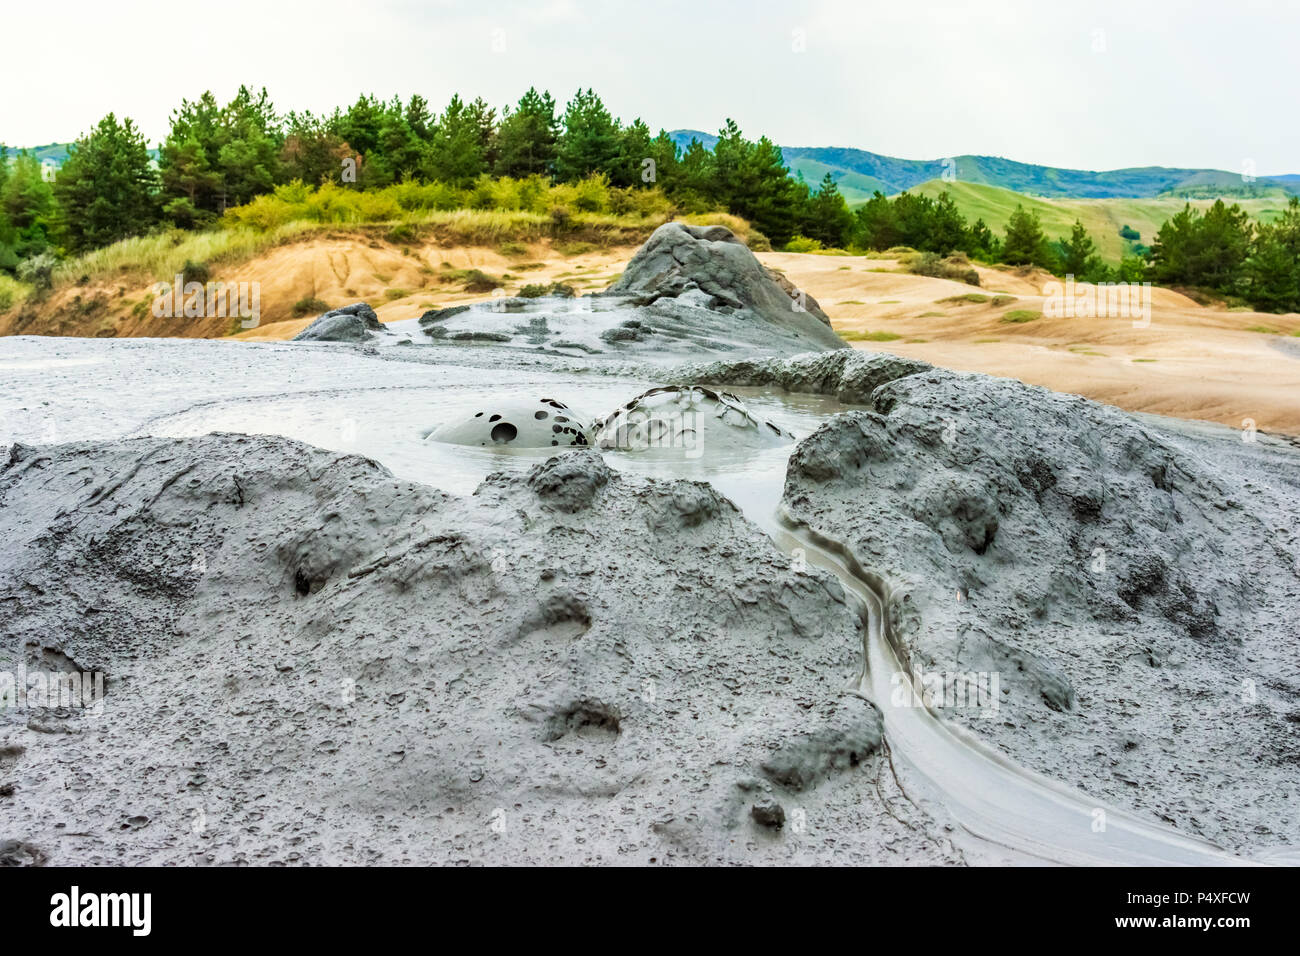 Buzau, Paclele mari, Romania: Bubbling mud, landscape with muddy volcano at sunset - landmark attraction Stock Photo